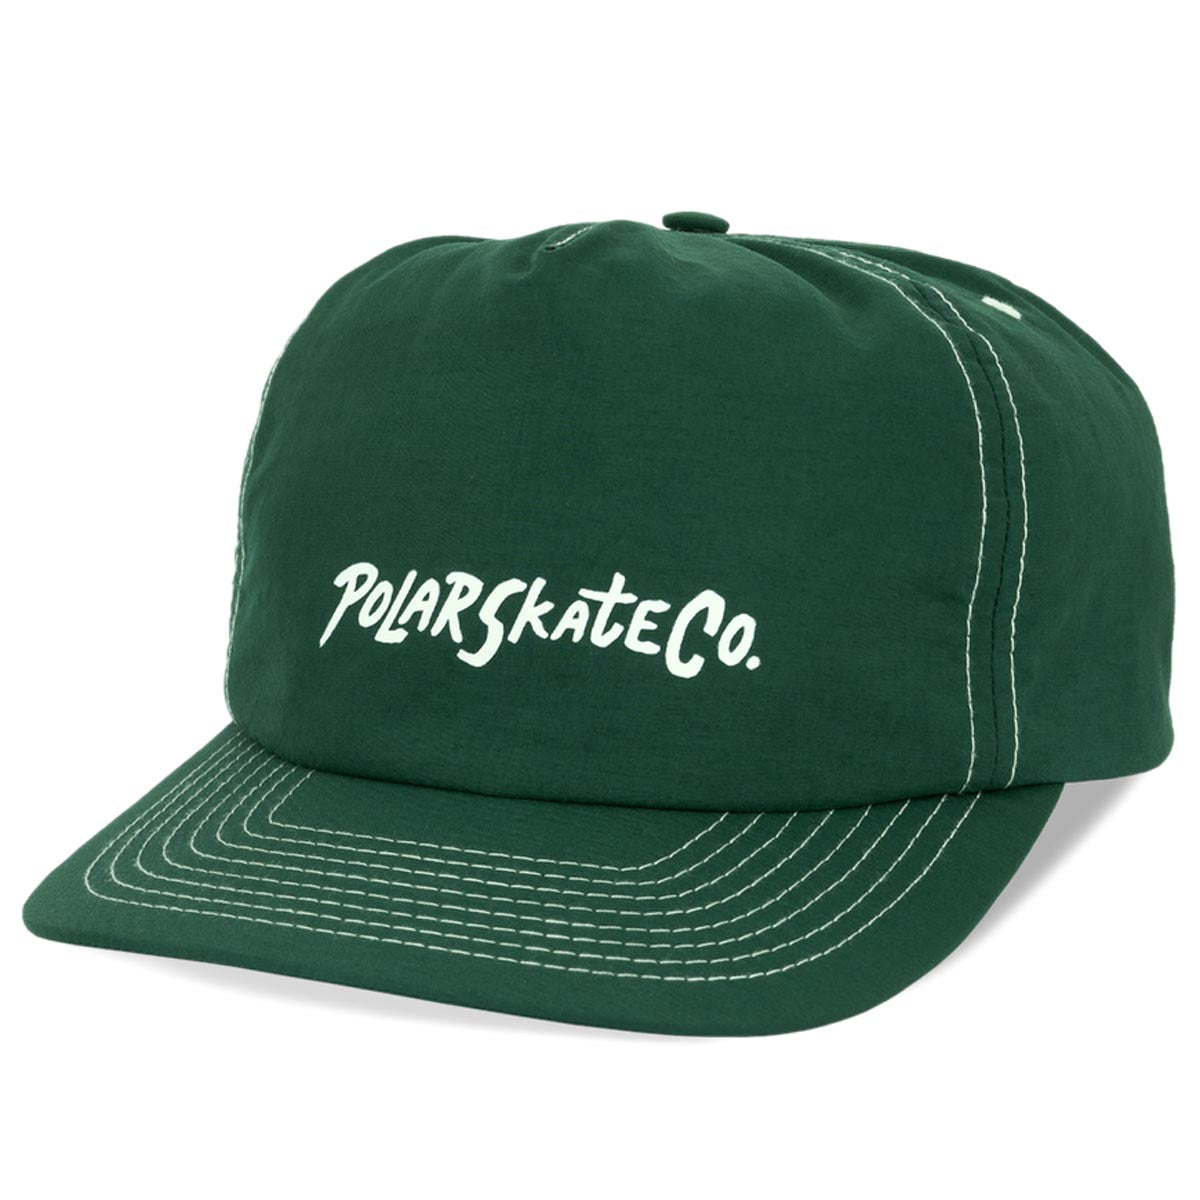 Polar Earl Cap Surf Logo Hat - Dark Green image 1